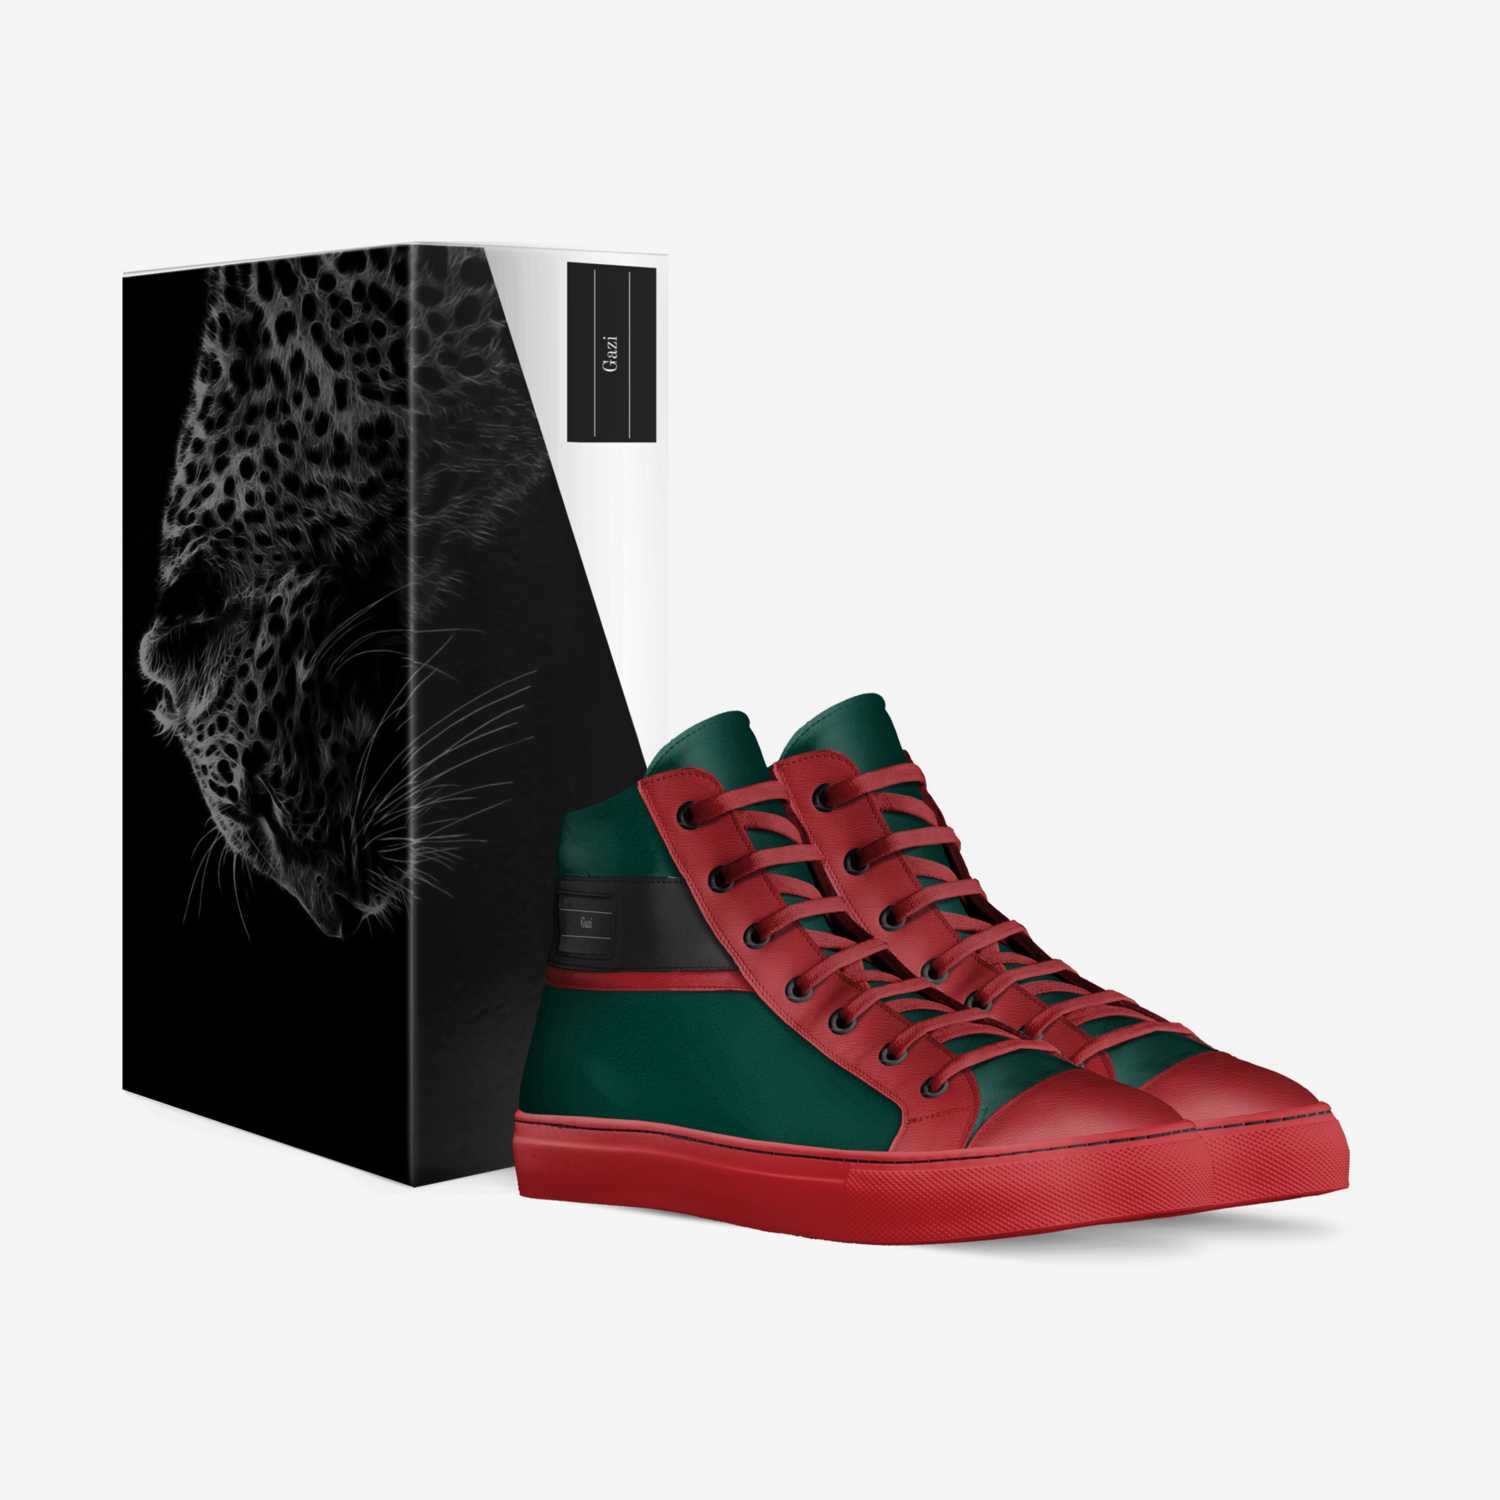 Gazi custom made in Italy shoes by Ziya Kilinc | Box view